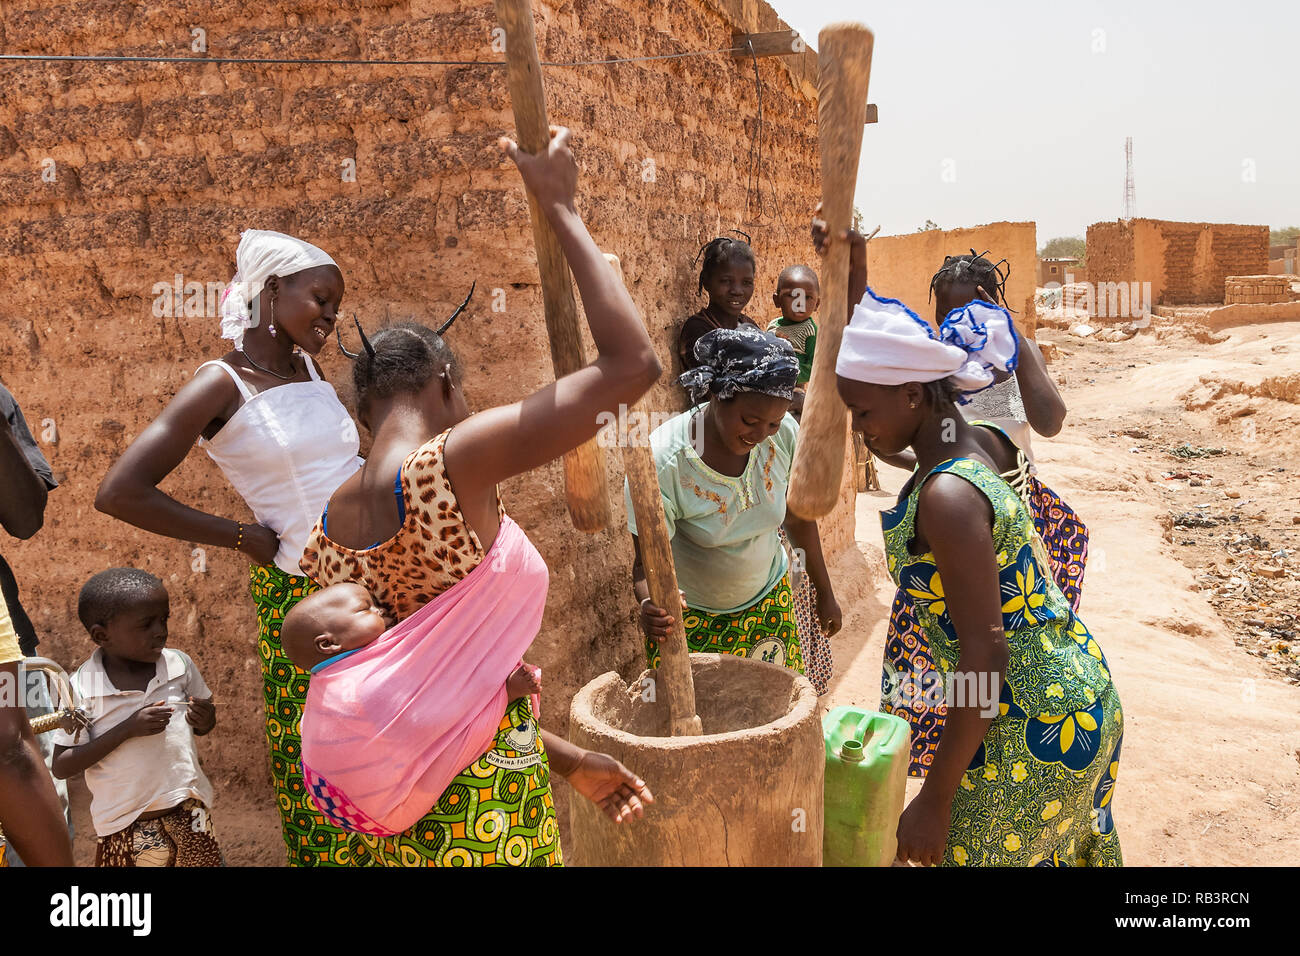 African women crushing cereals with traditional wooden mortar and pestles, Ouagadougou, Burkina Faso. Stock Photo